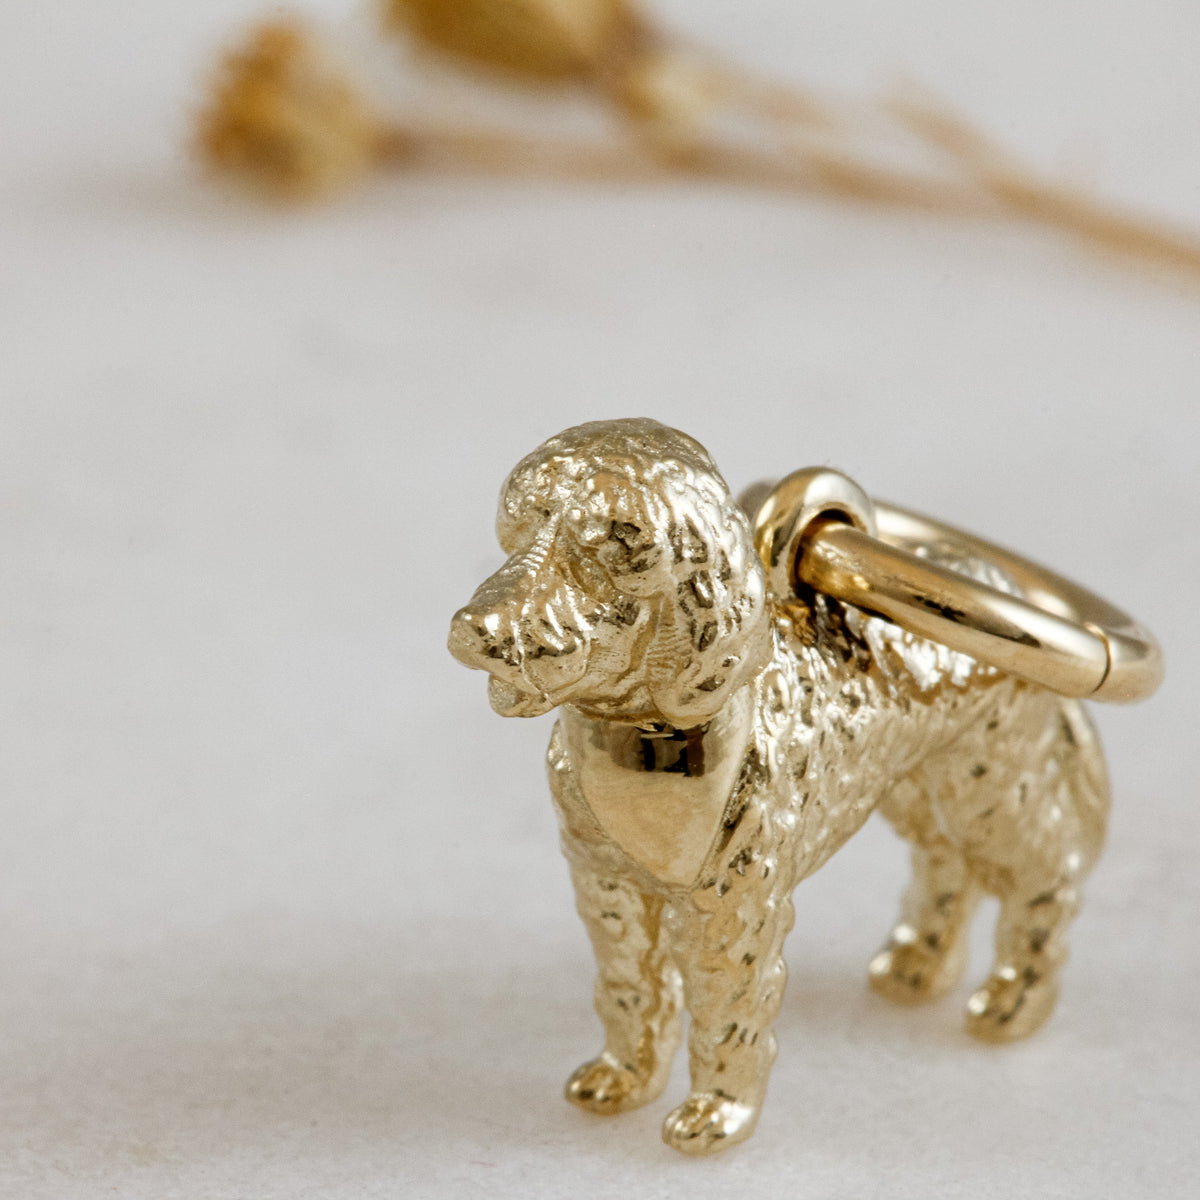 labradoodle solid gold dog charm for a necklace or bracelet